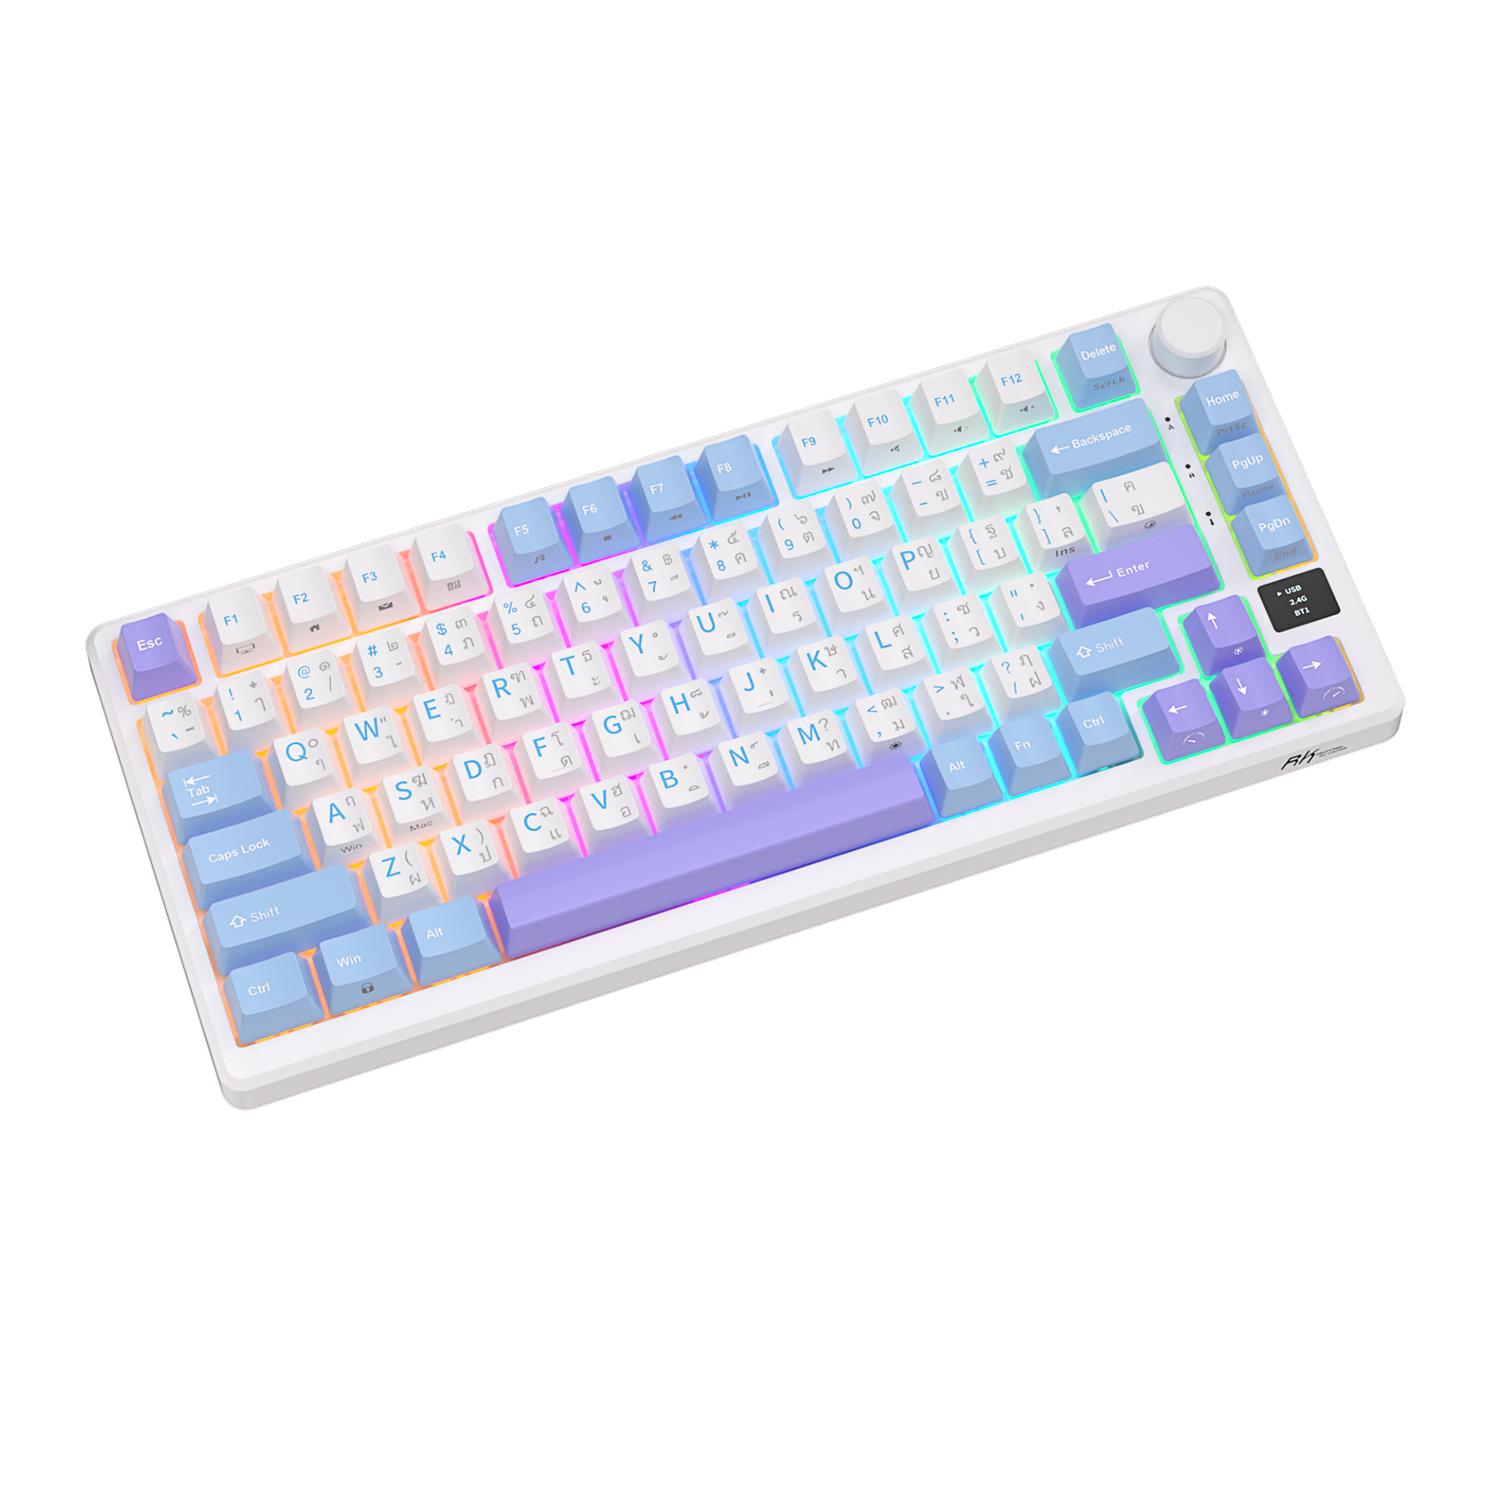 Royal Kludge M75 (RKM75) Taro Milk with backlit keyboard, diagonal position, tilted to the left. Light color scheme with pastels (blue, lavender and white keys keyboard)